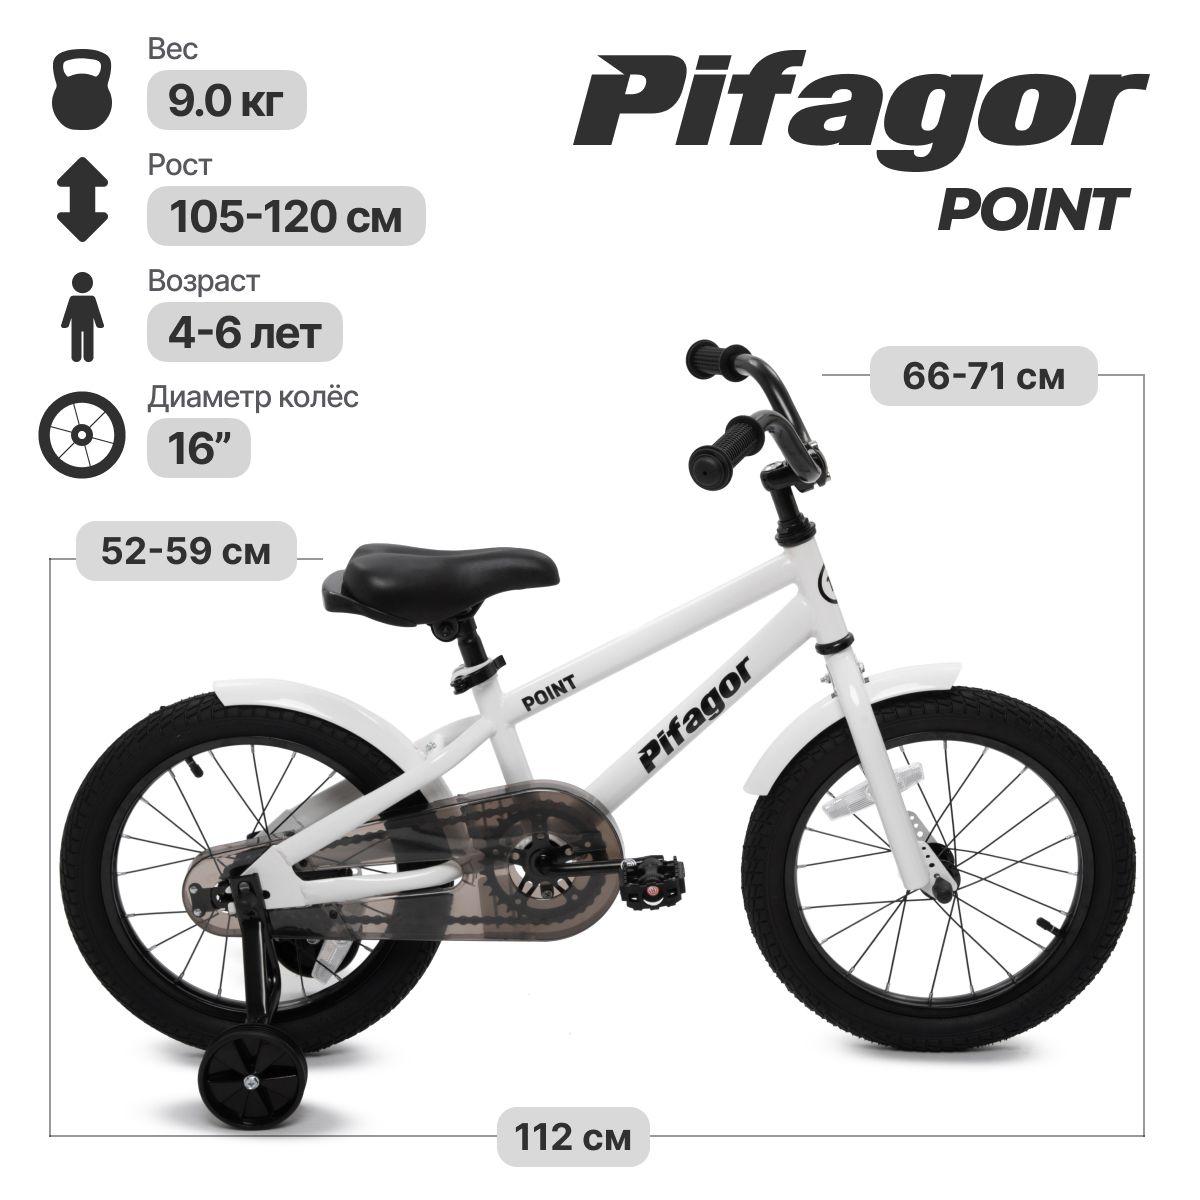 Pifagor | Велосипед Pifagor Point 16